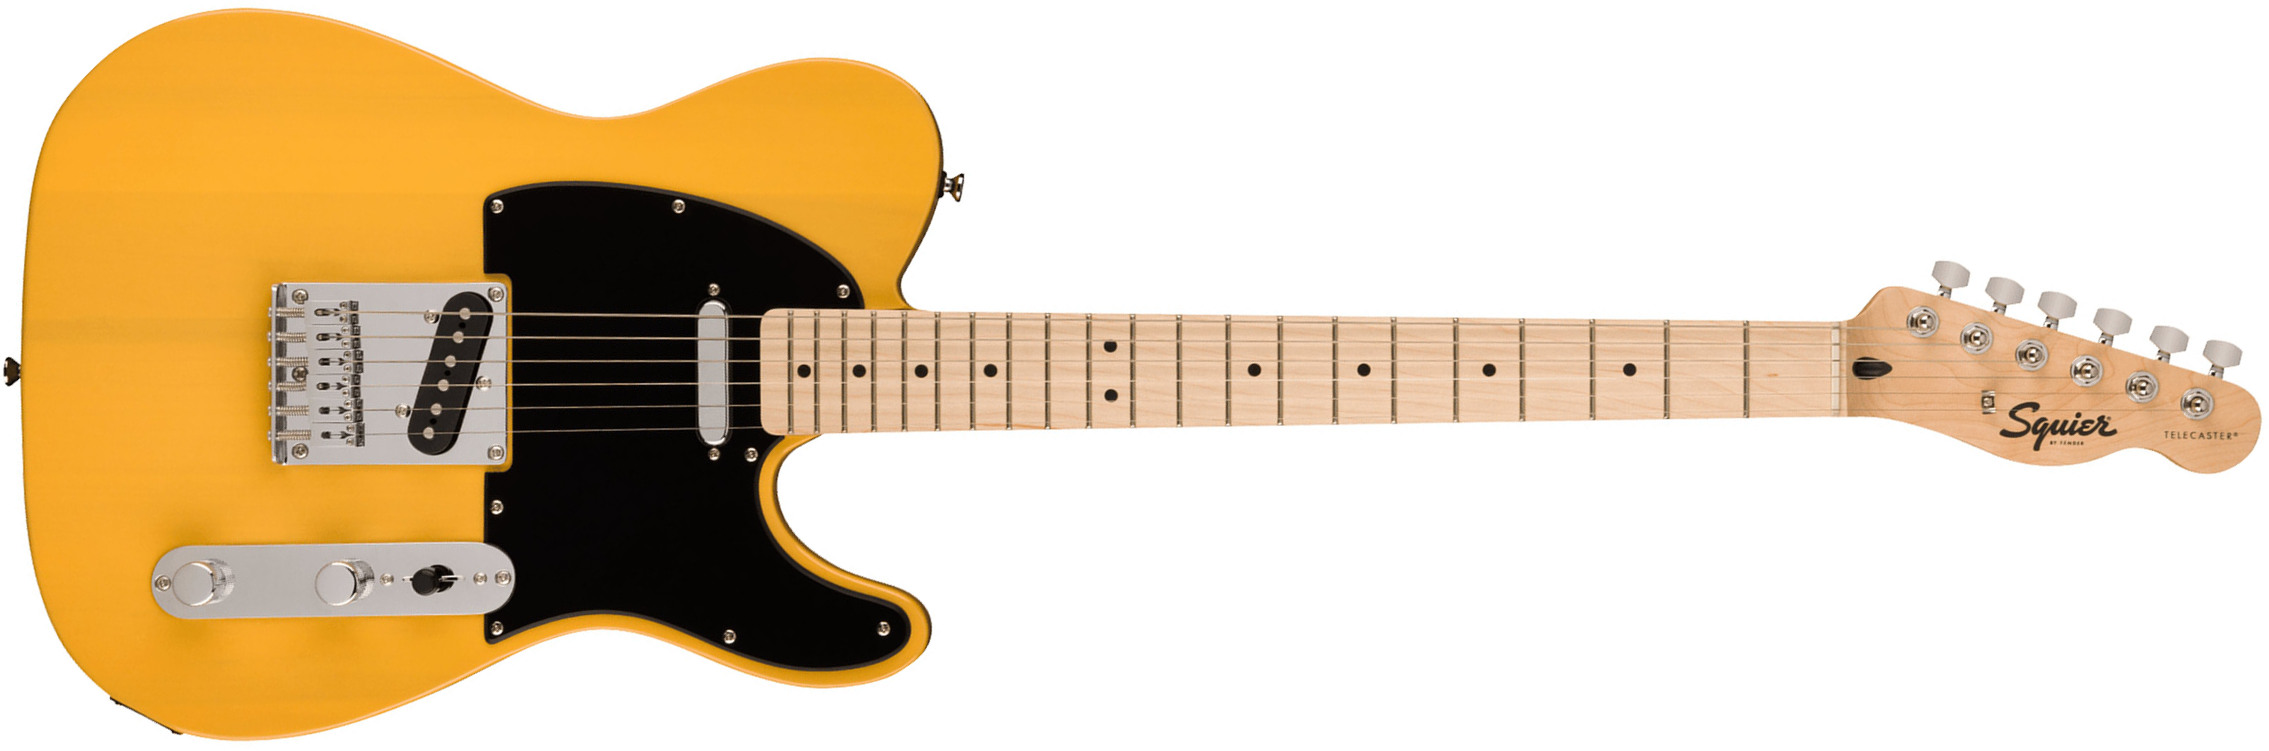 Squier Tele Sonic 2s Ht Mn - Butterscotch Blonde - Tel shape electric guitar - Main picture